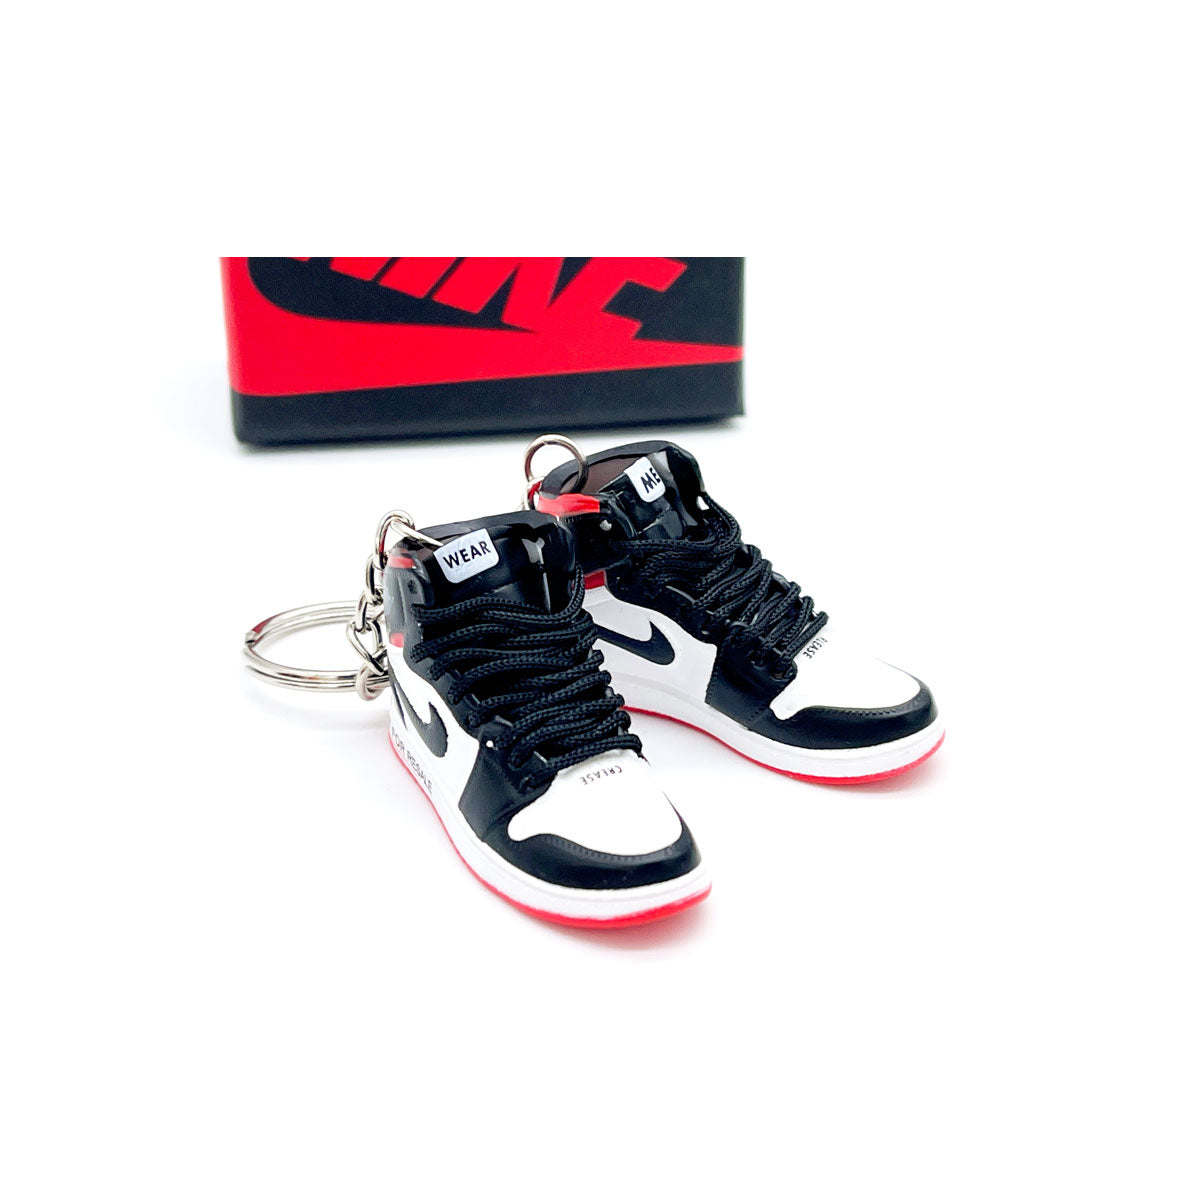 3D Sneaker Keychain- Air Jordan 1 High 'Not For Resale' Varsity Red Pair